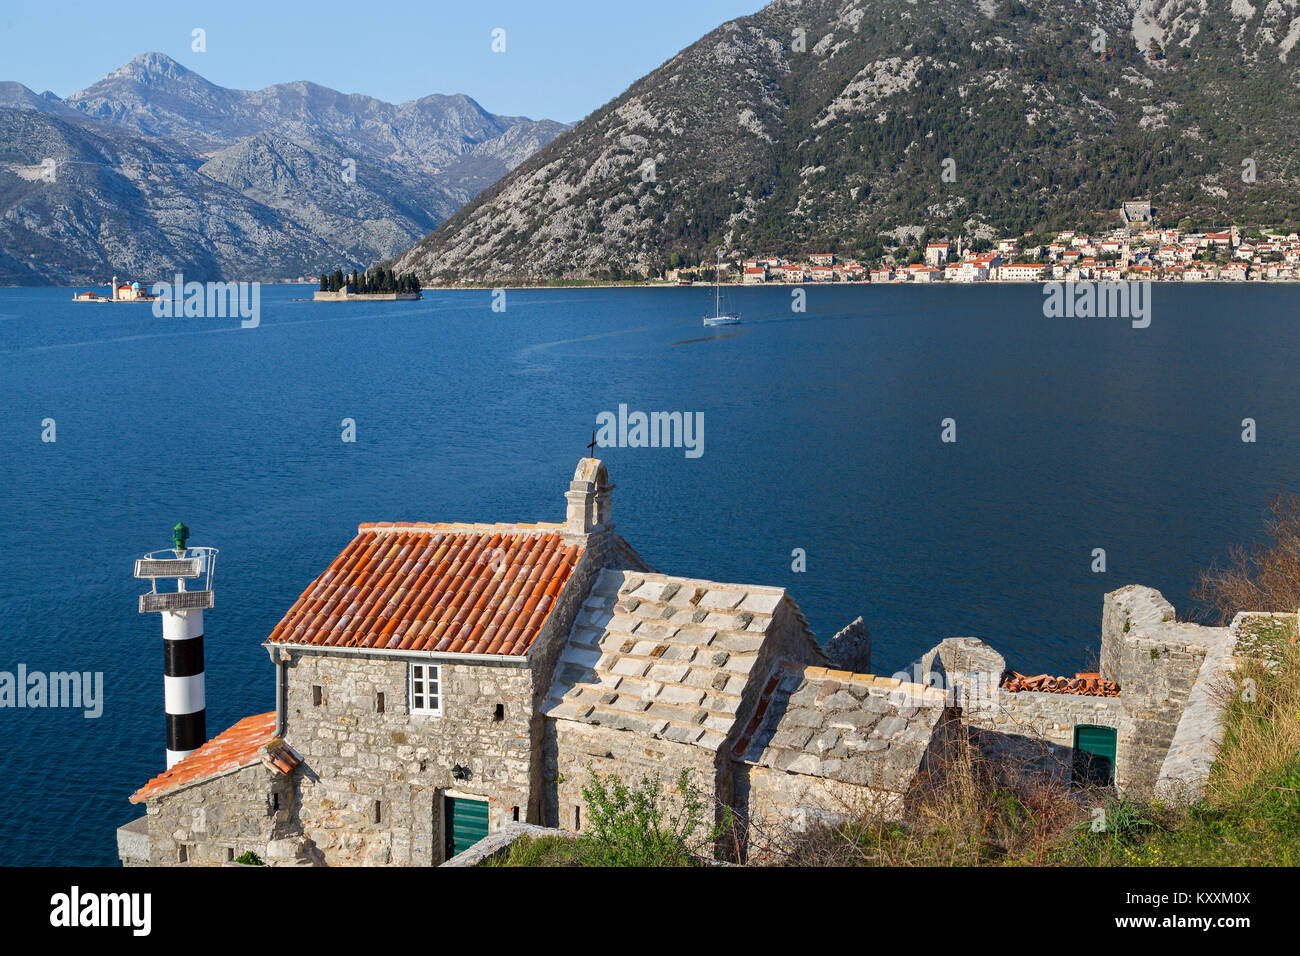 Kotor bay in Adriatic Sea, Montenegro Stock Photo